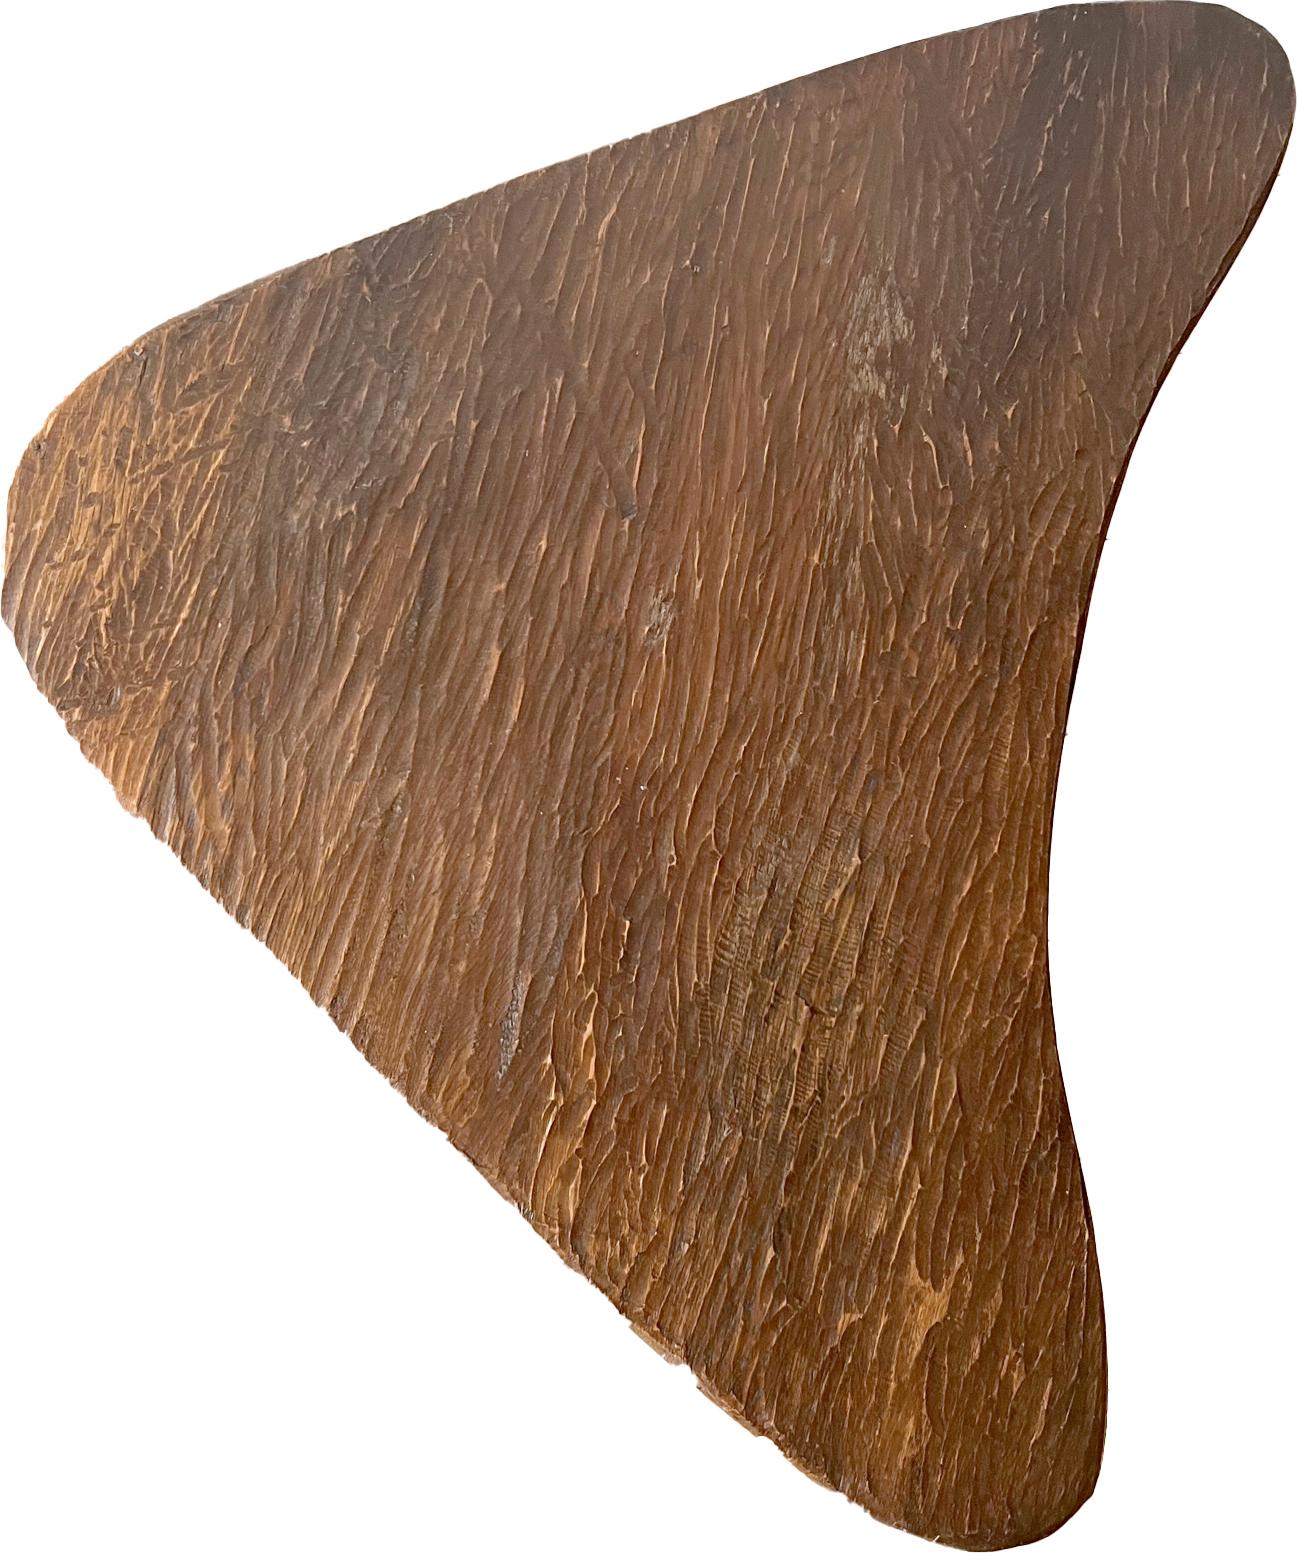 boomerang shaped coffee table